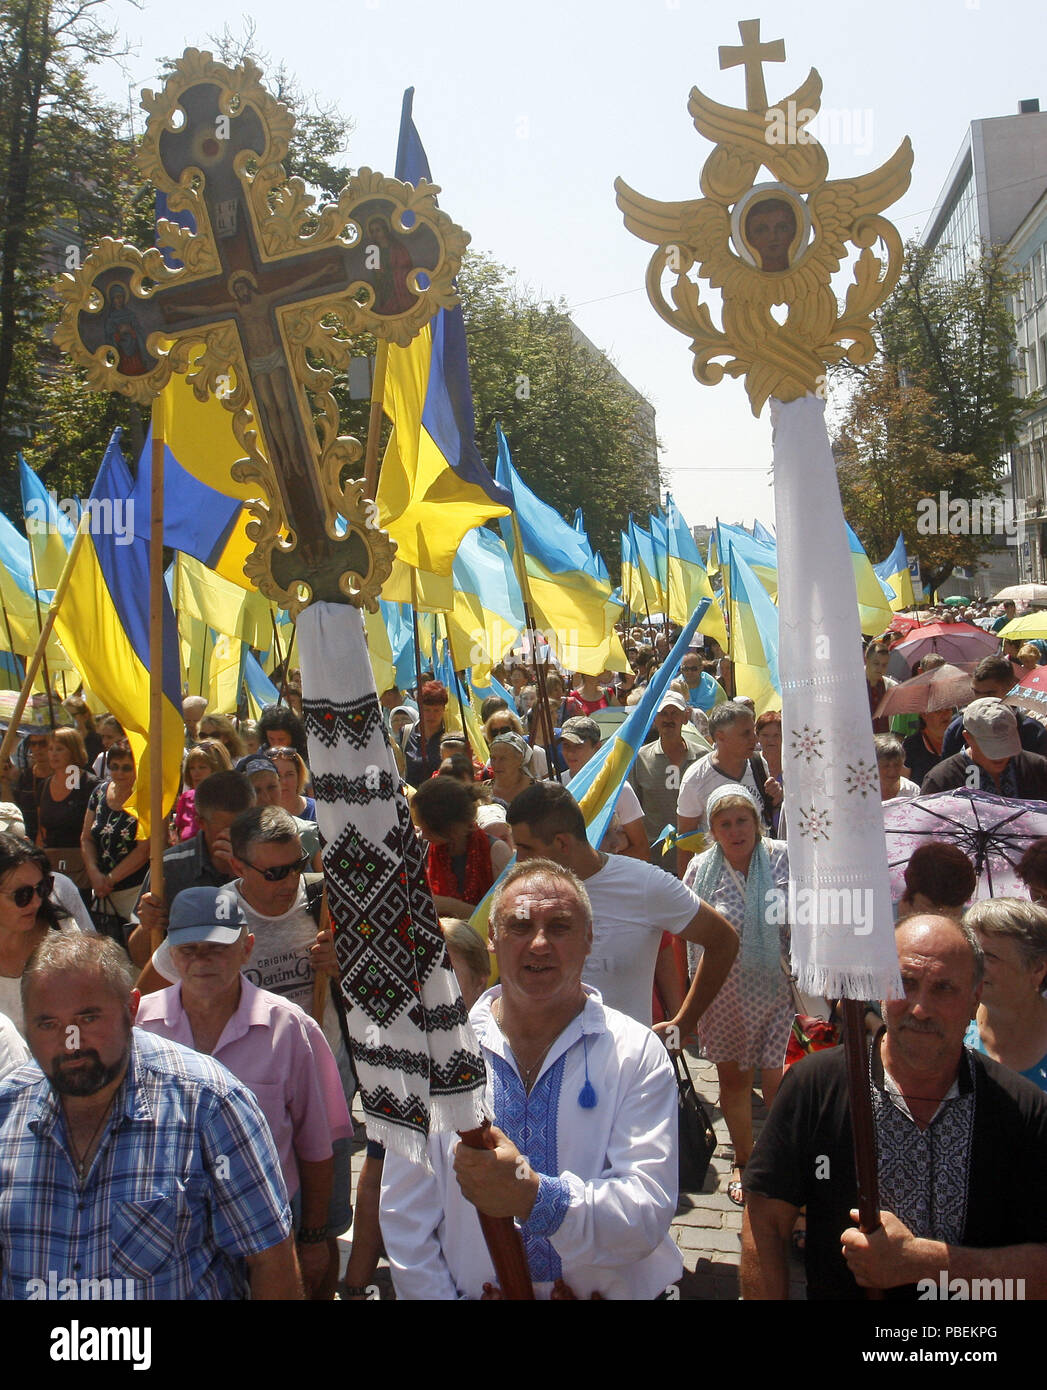 kiev-ukraine-28th-july-2018-ukrainian-orthodox-believers-and-priests-attend-a-religion-march-organized-by-the-ukrainian-orthodox-church-of-kiev-patriarchate-in-kiev-ukraine-on-28-july-2018-orthodox-believers-mark-the-1030th-anniversary-of-kievan-rus-christianization-on-27-and-28-july-2018-credit-serg-glovnyzuma-wirealamy-live-news-PBEKPG.jpg